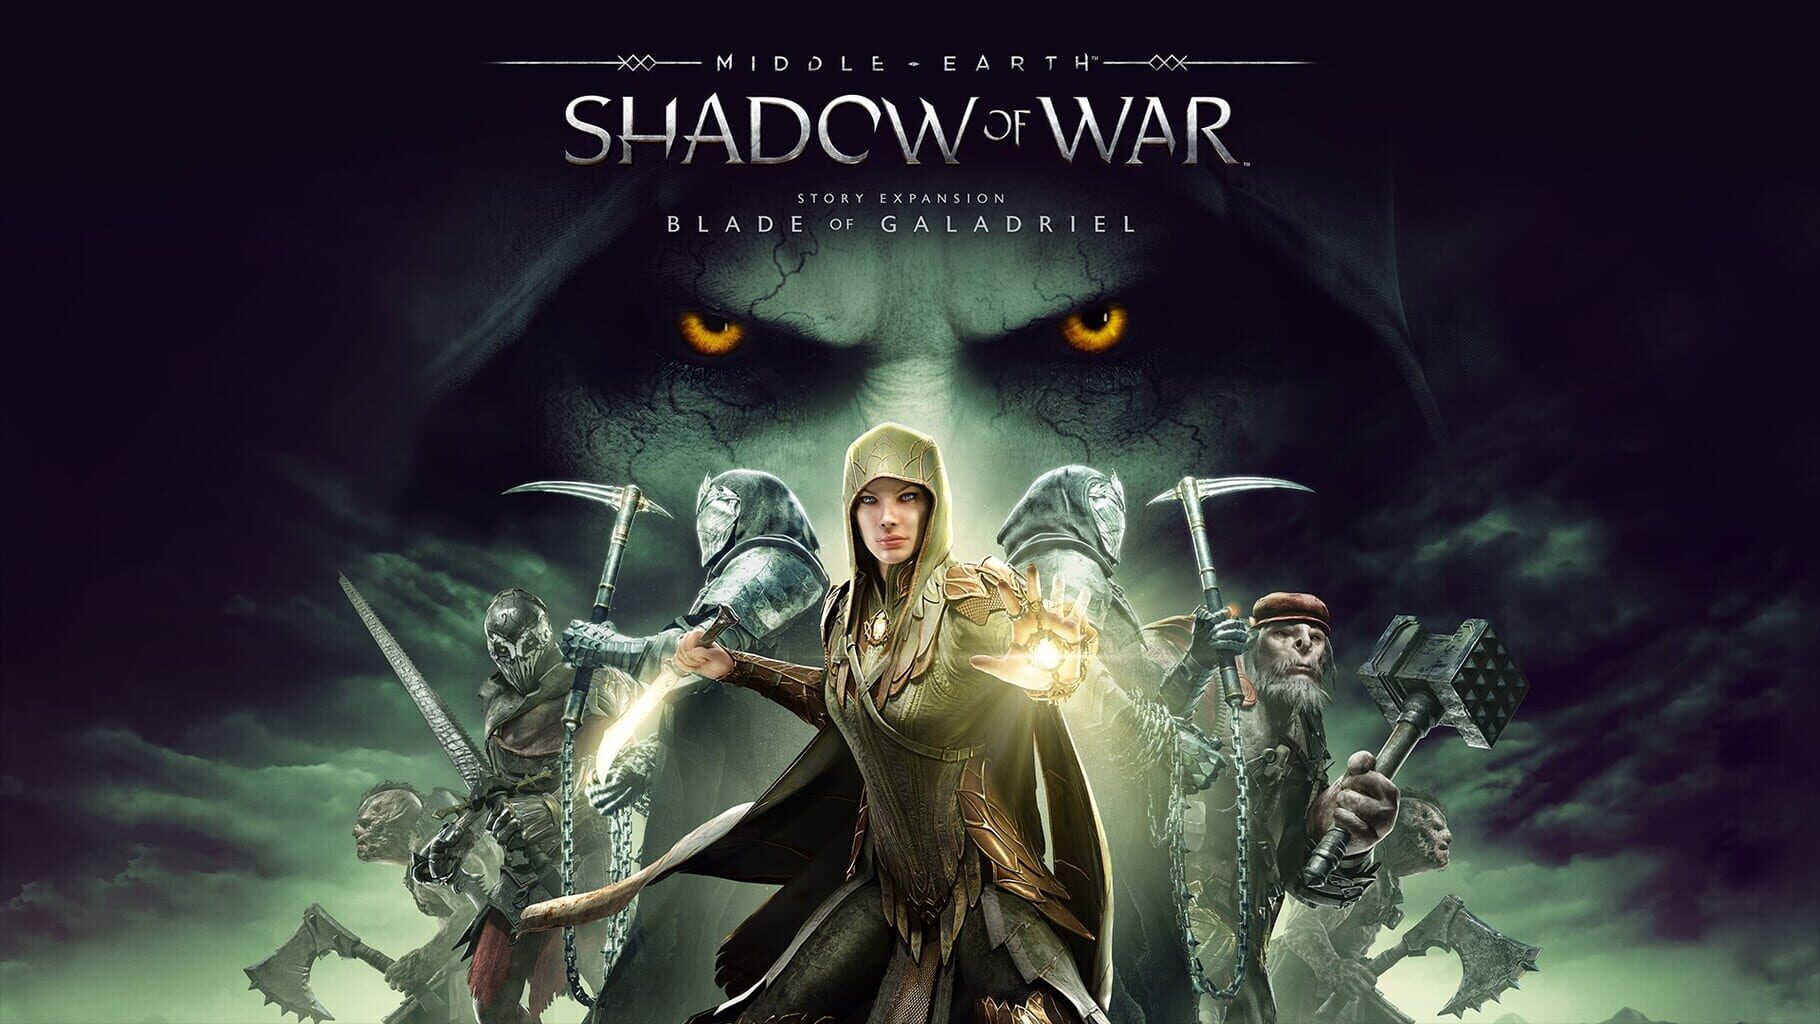 Arte - Middle-earth: Shadow of War - Blade of Galadriel